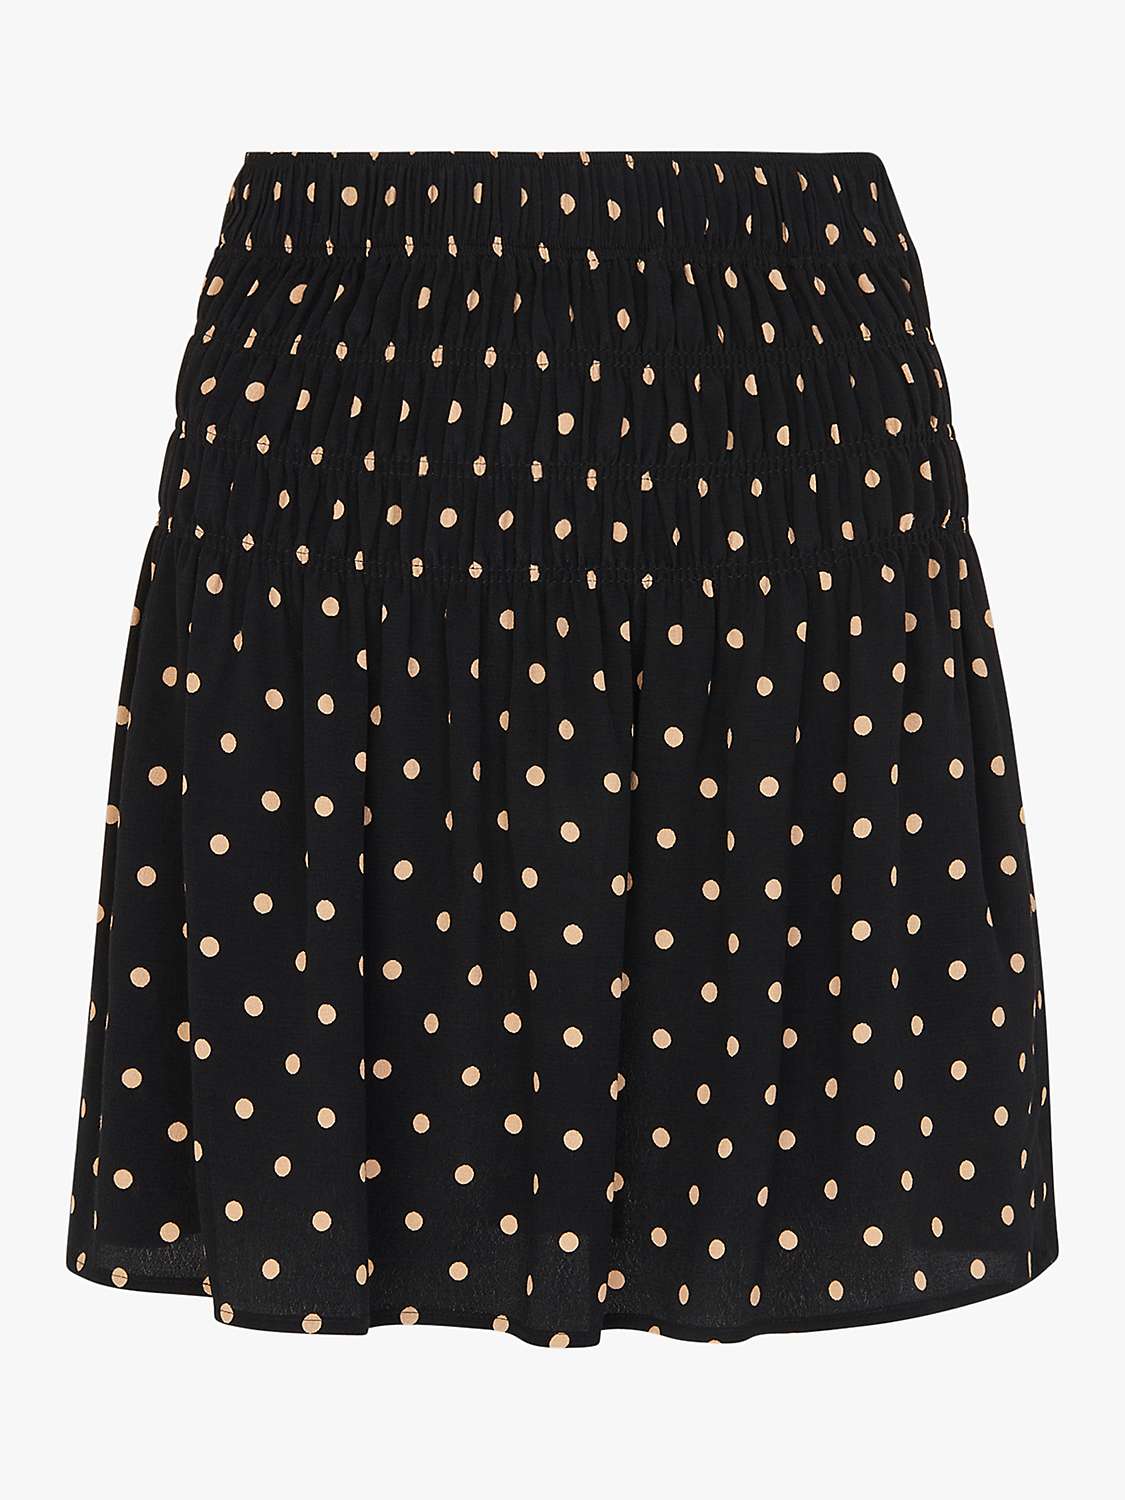 Whistles Polka Dot Shirred Mini Skirt, Black/Multi at John Lewis & Partners